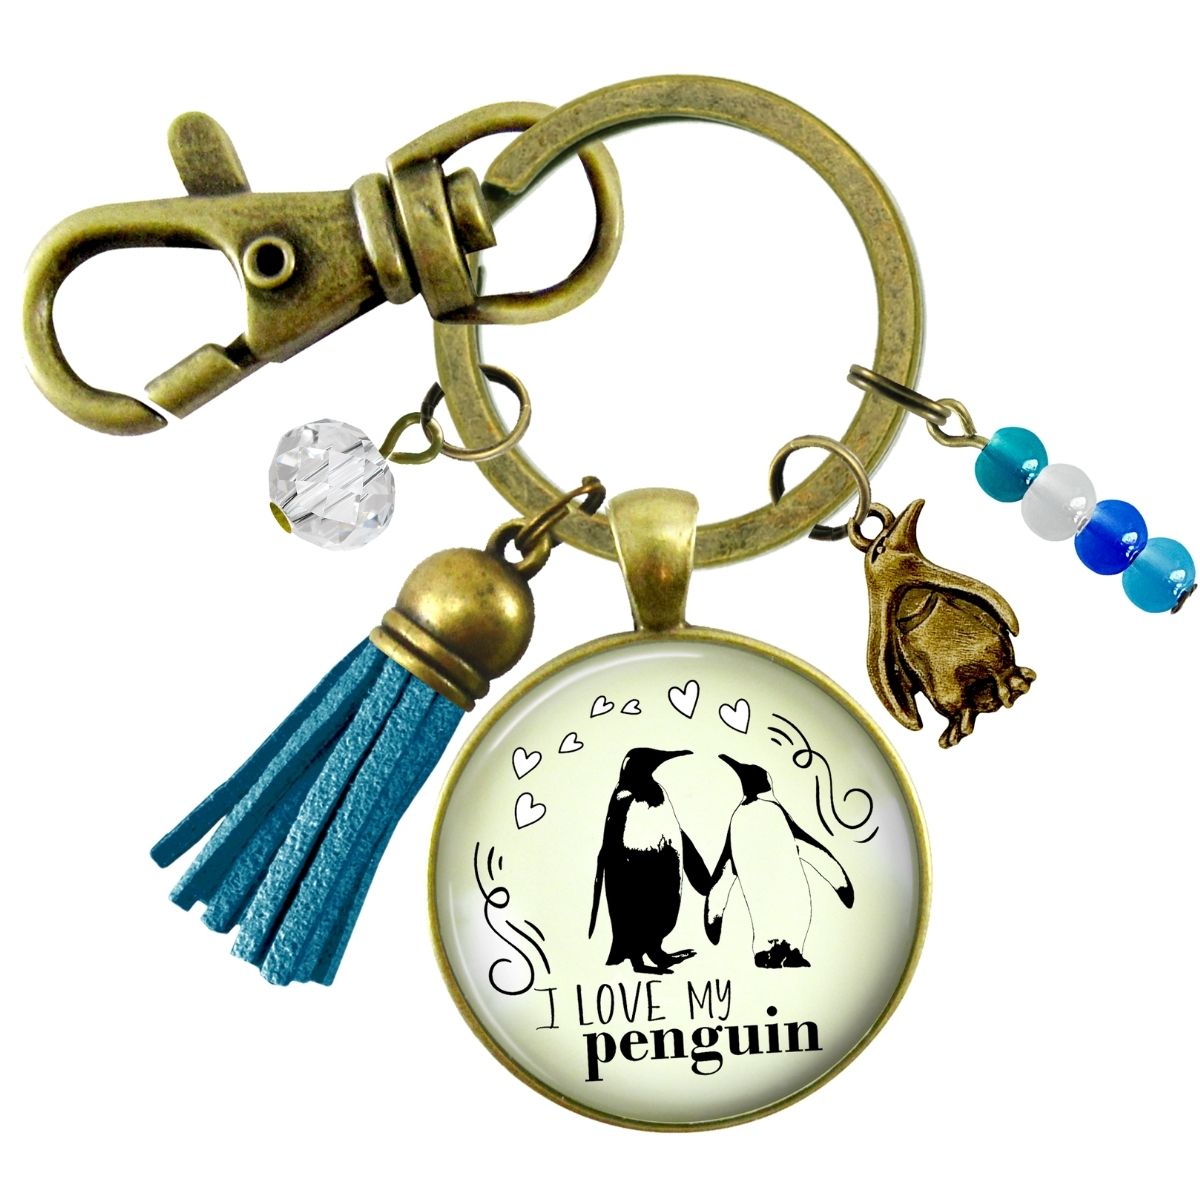 I Love My Penguin Keychain Gift for Her